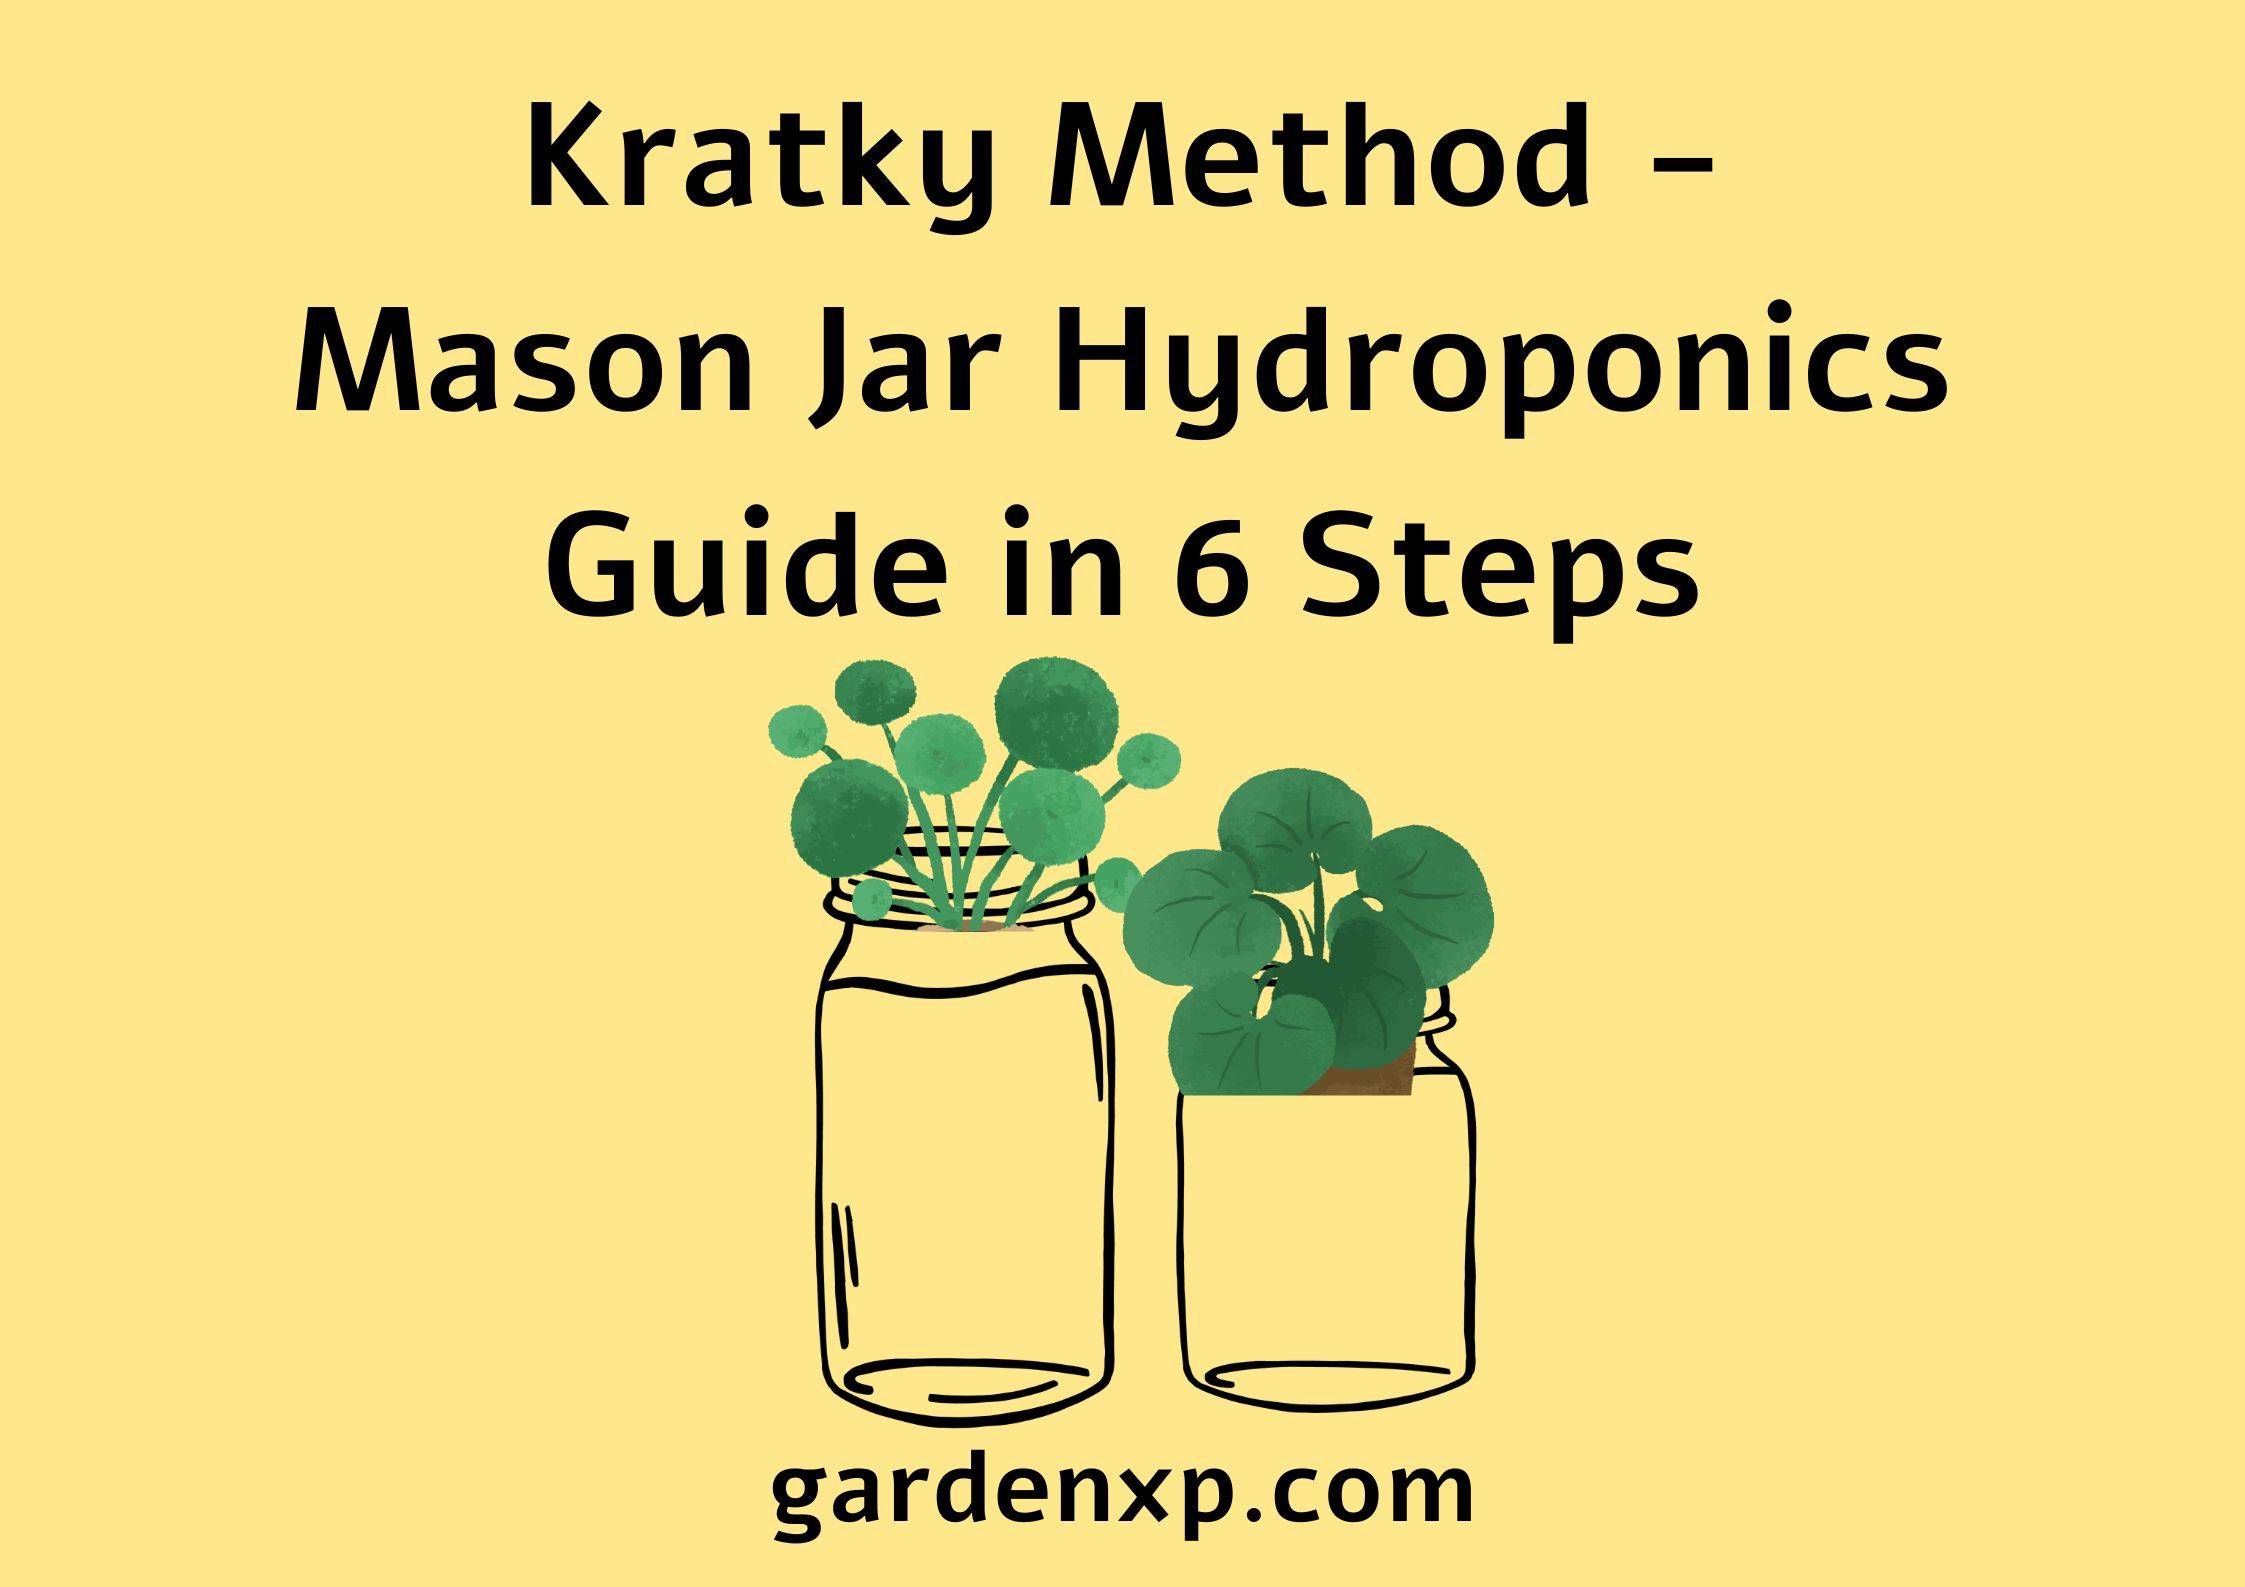 Kratky Method - Mason Jar Hydroponics Guide in 6 Steps